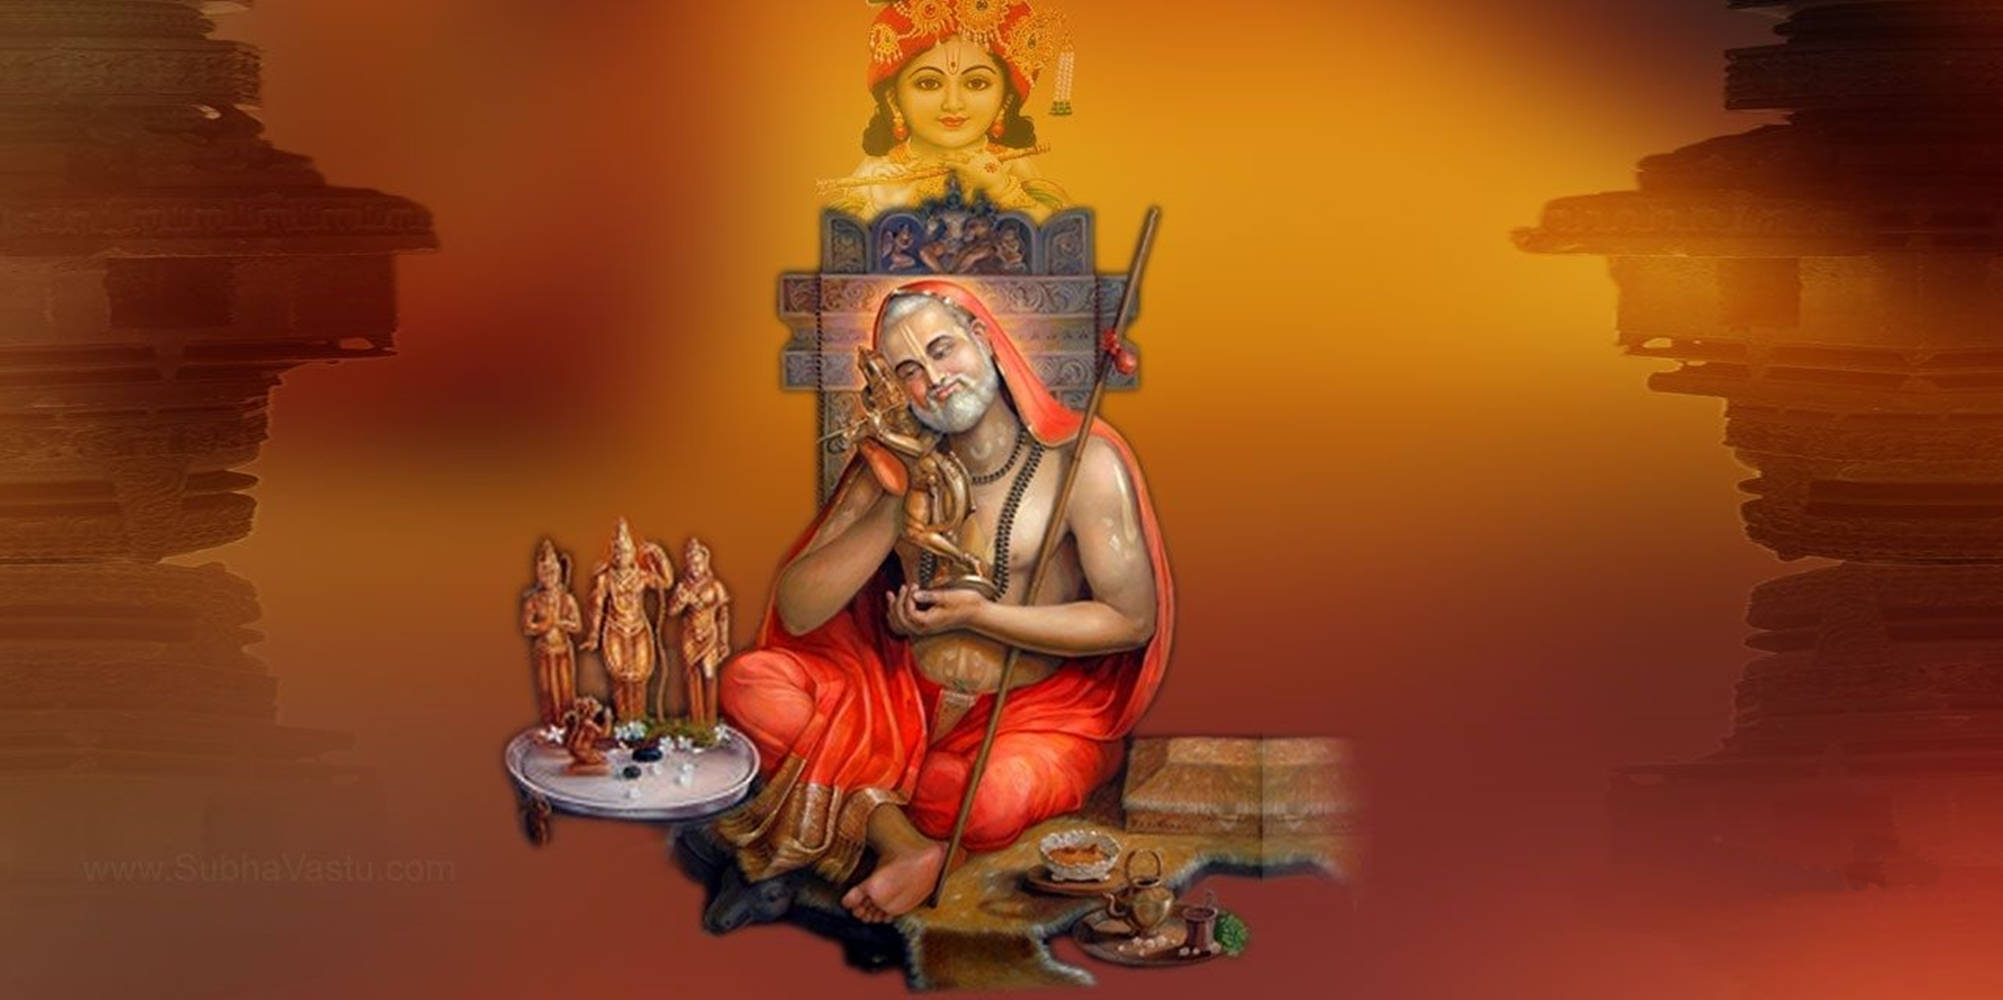 Raghavendracon Estatuas De Dioses Indios En Un Estilo Estético Naranja Fondo de pantalla